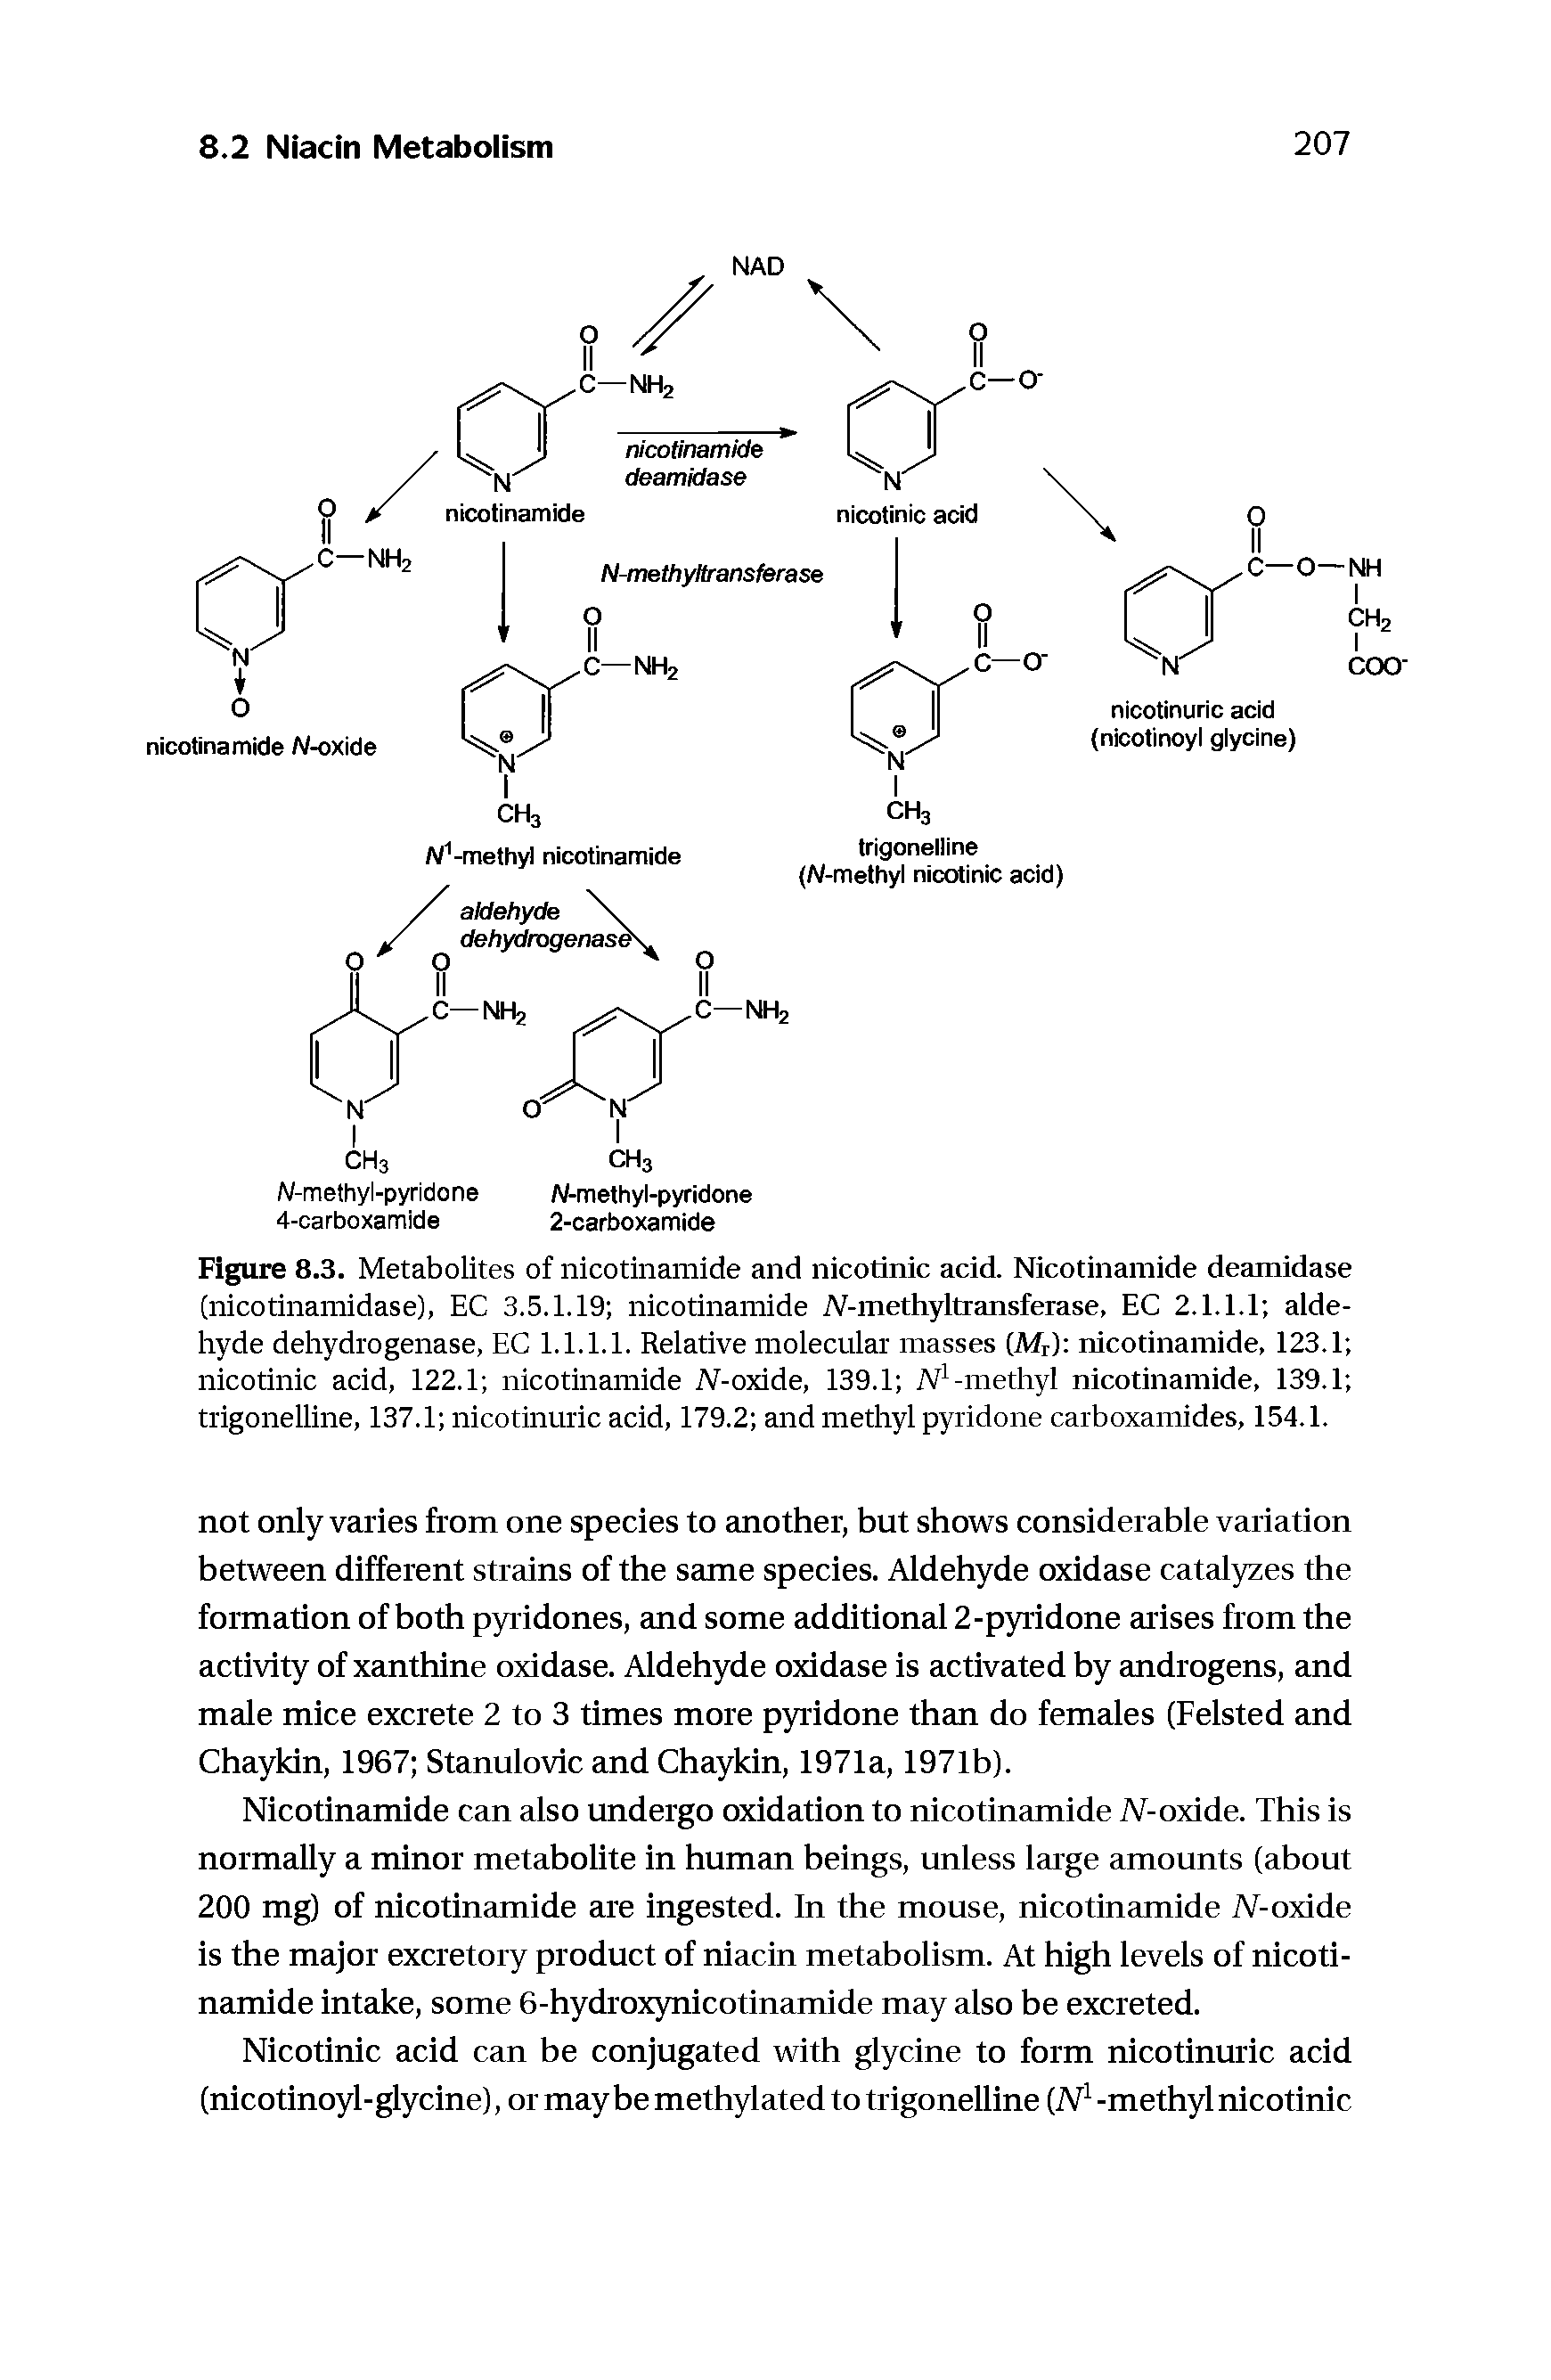 Figure 8.3. Metabolites of nicotinamide and nicotinic acid. Nicotinamide deamidase (nicotinamidase), EC 3.5.1.19 nicotinamide N-methyltransferase, EC 2.1.1.1 aldehyde dehydrogenase, EC 1.1.1.1. Relative molecular masses (Mr) nicotinamide, 123.1 nicotinic acid, 122.1 nicotinamide N-oxide, 139.1 iV -methyl nicotinamide, 139.1 trigonelline, 137.1 nicotinuiic acid, 179.2 and methyl pyridone carboxamides, 154.1.